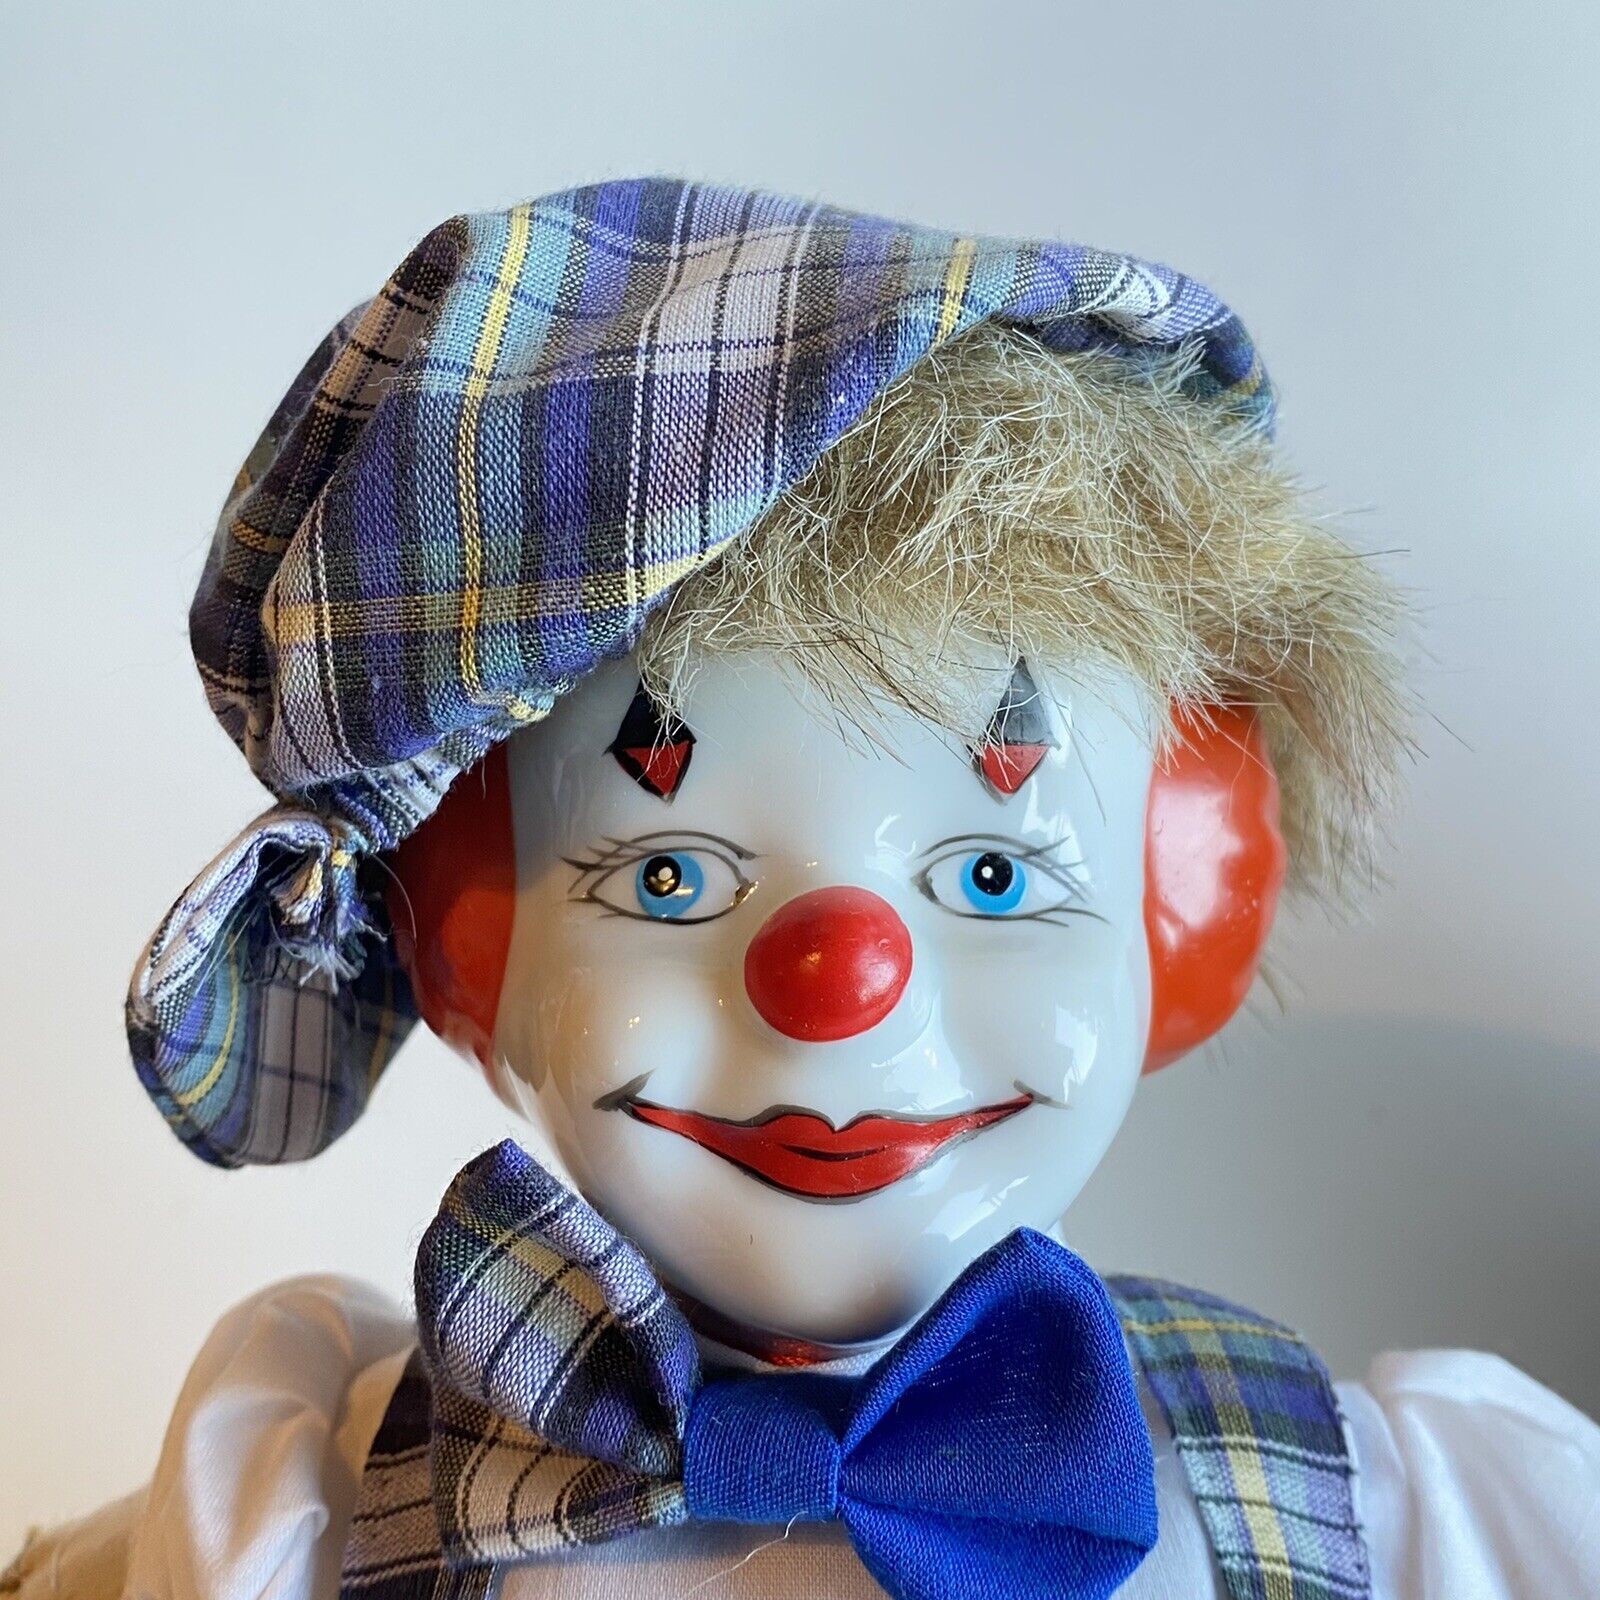 2 Vintage Musical Clown Dolls 8” Music Box Fabric Body Fur Elise Love Story